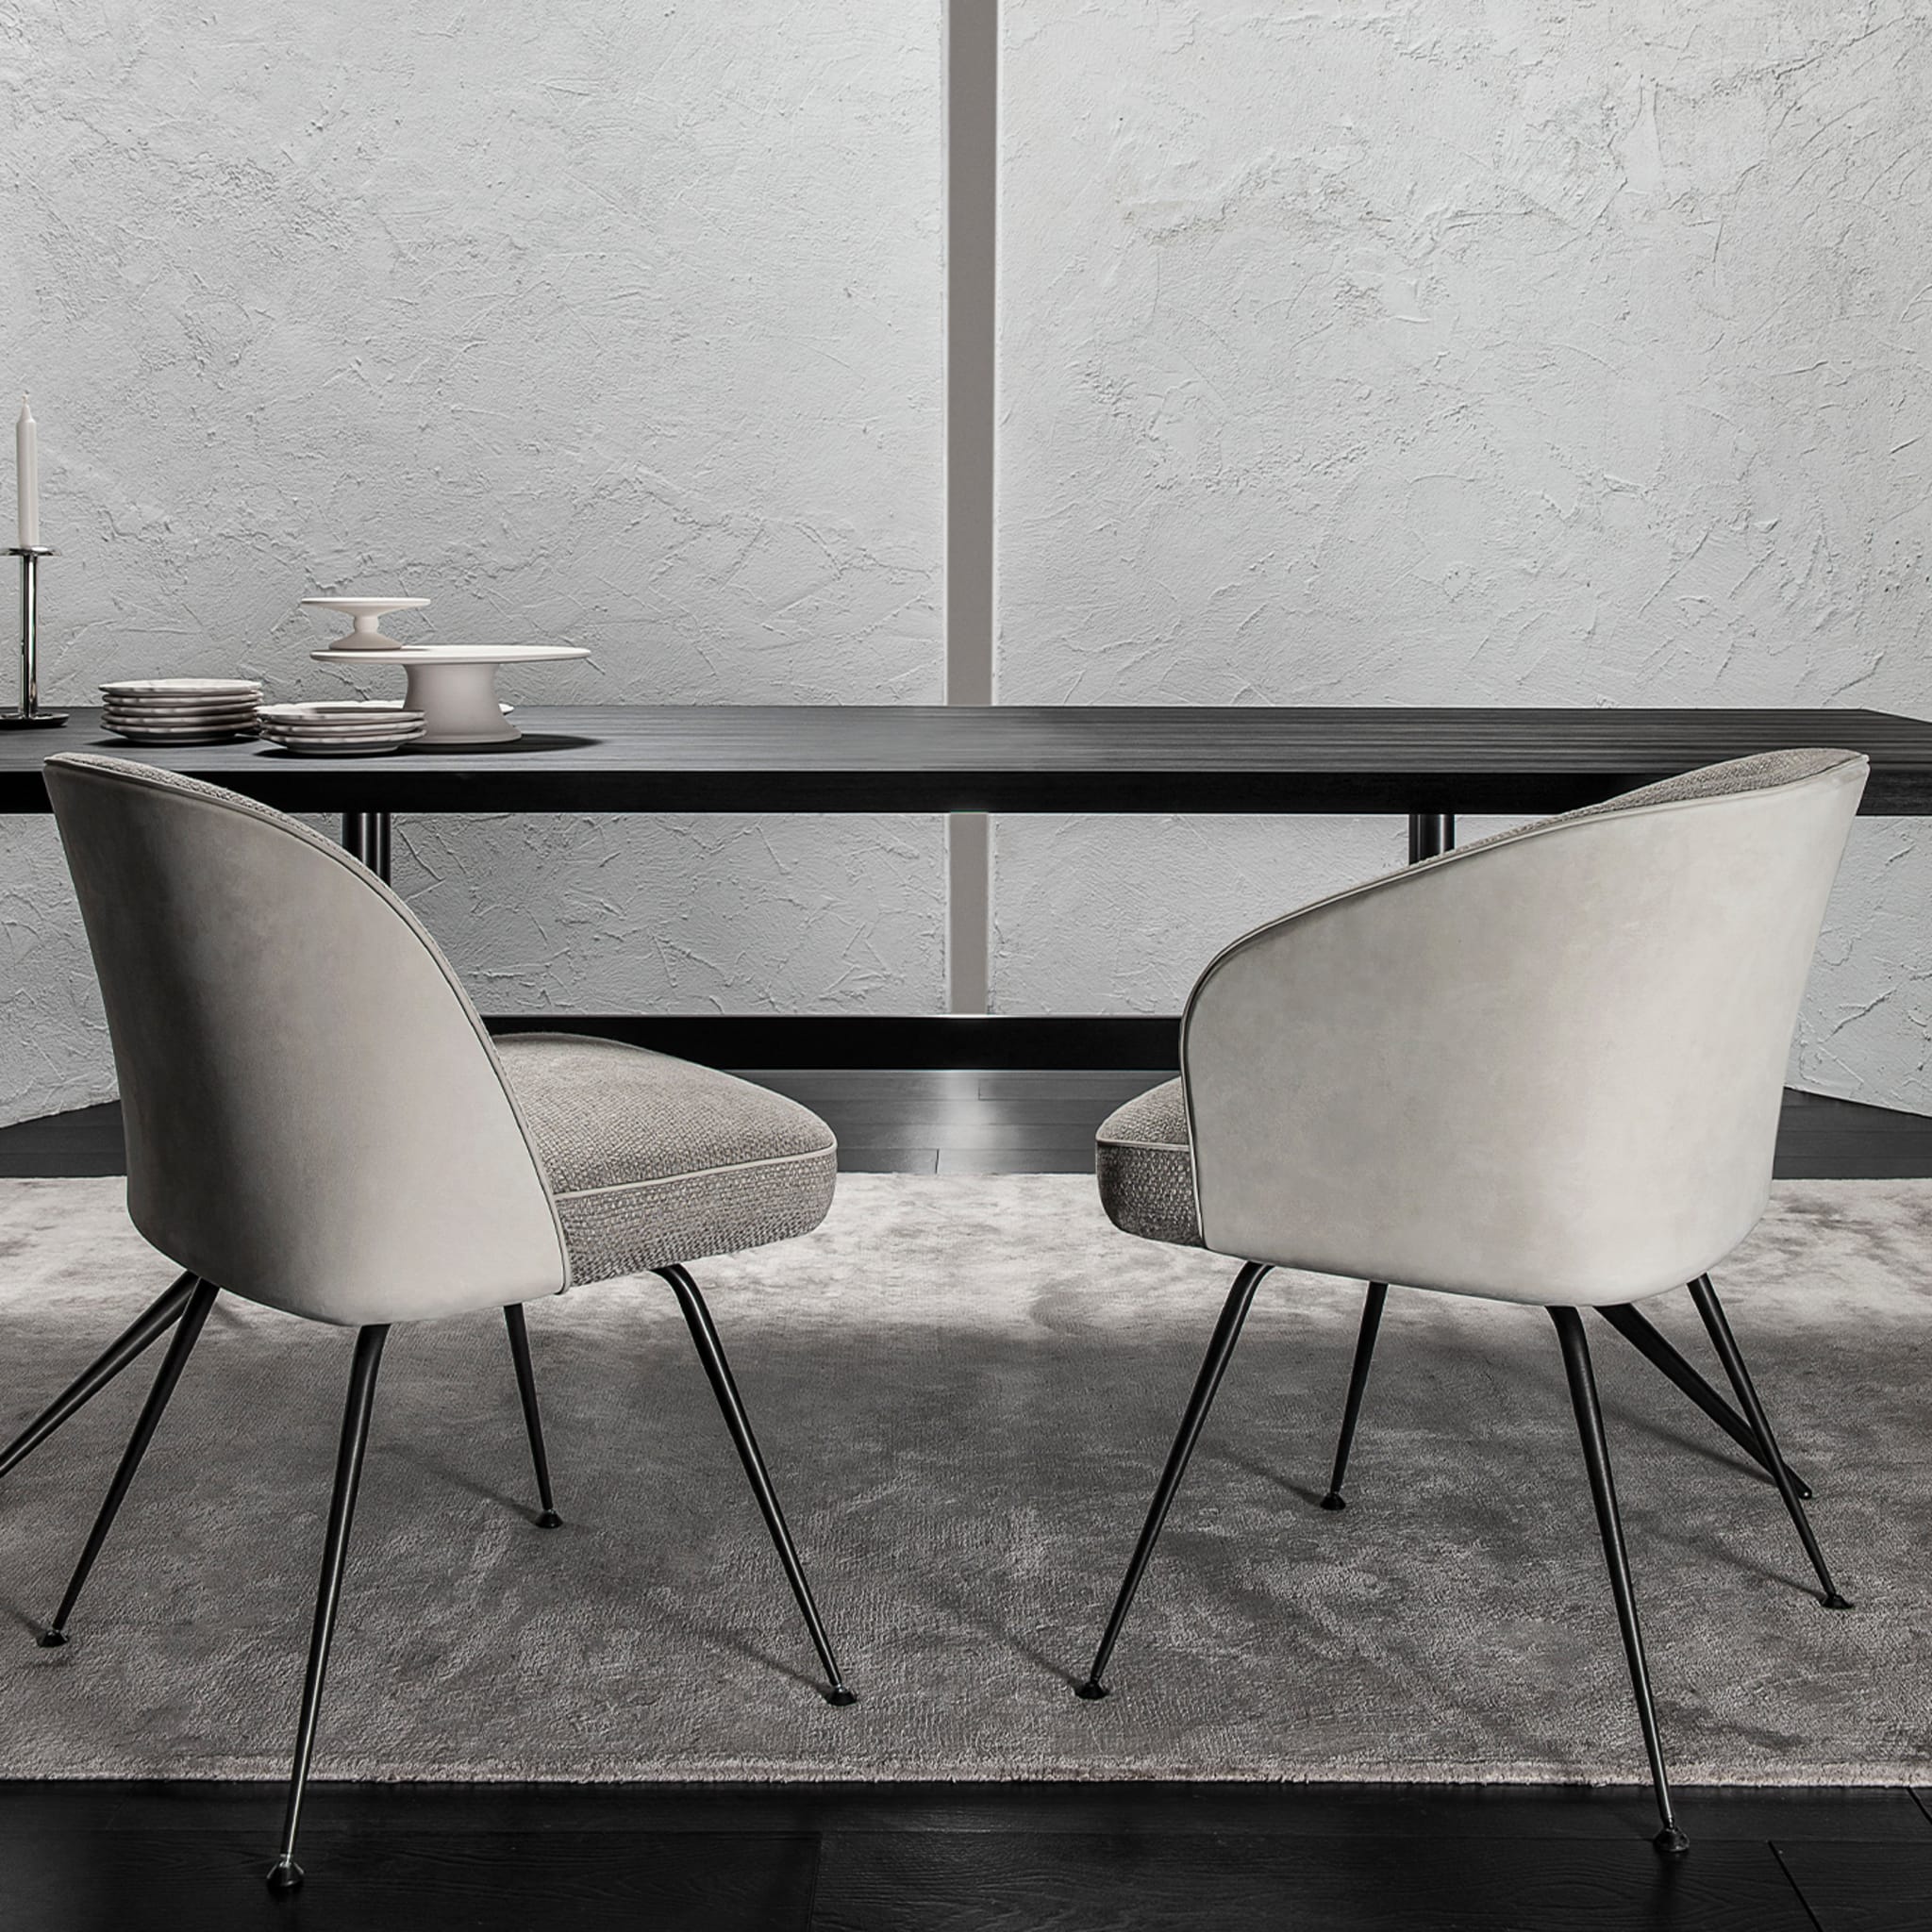 Like 1400 Gray Chair by Gianluigi Landoni - Alternative view 4